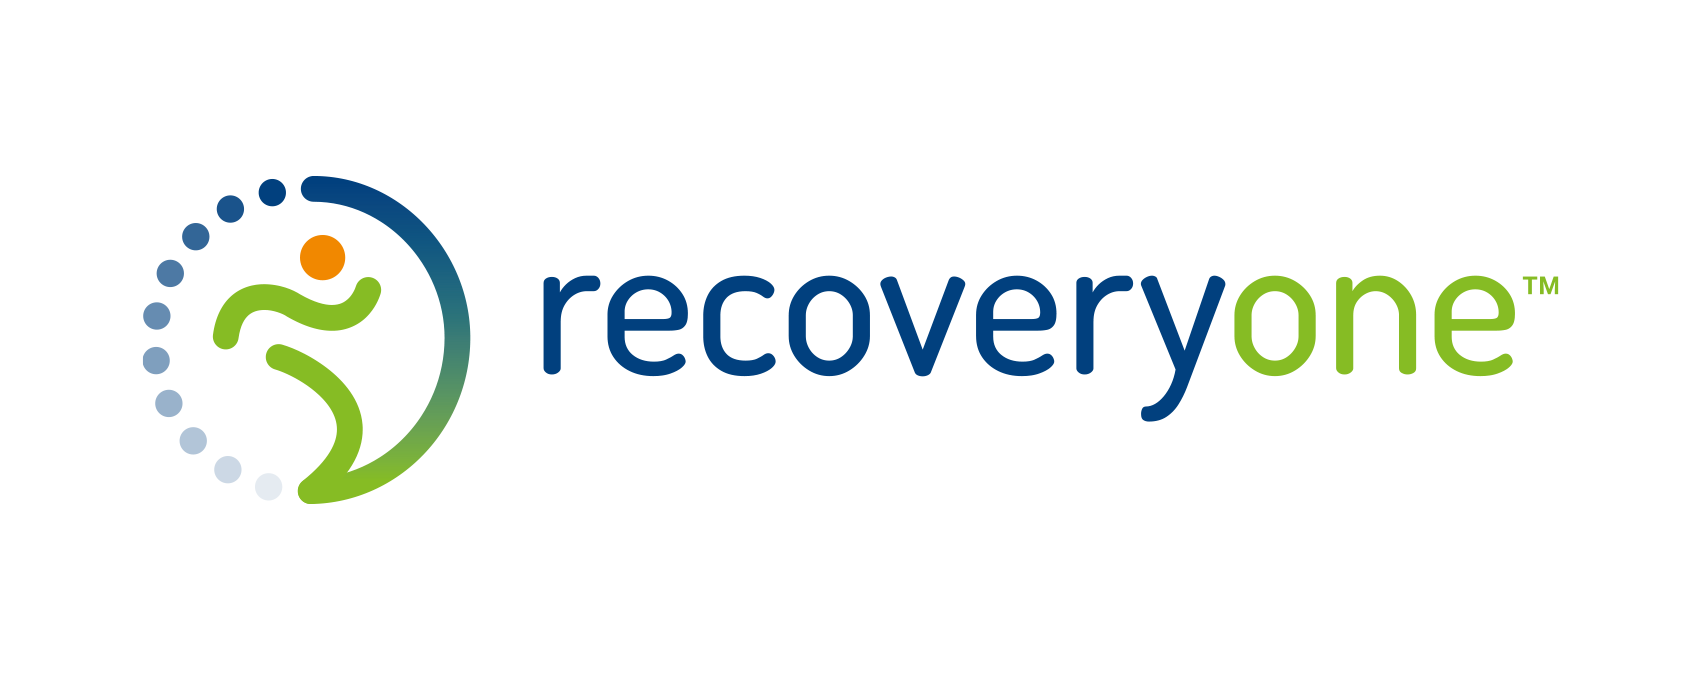 recoveryone-logo.png